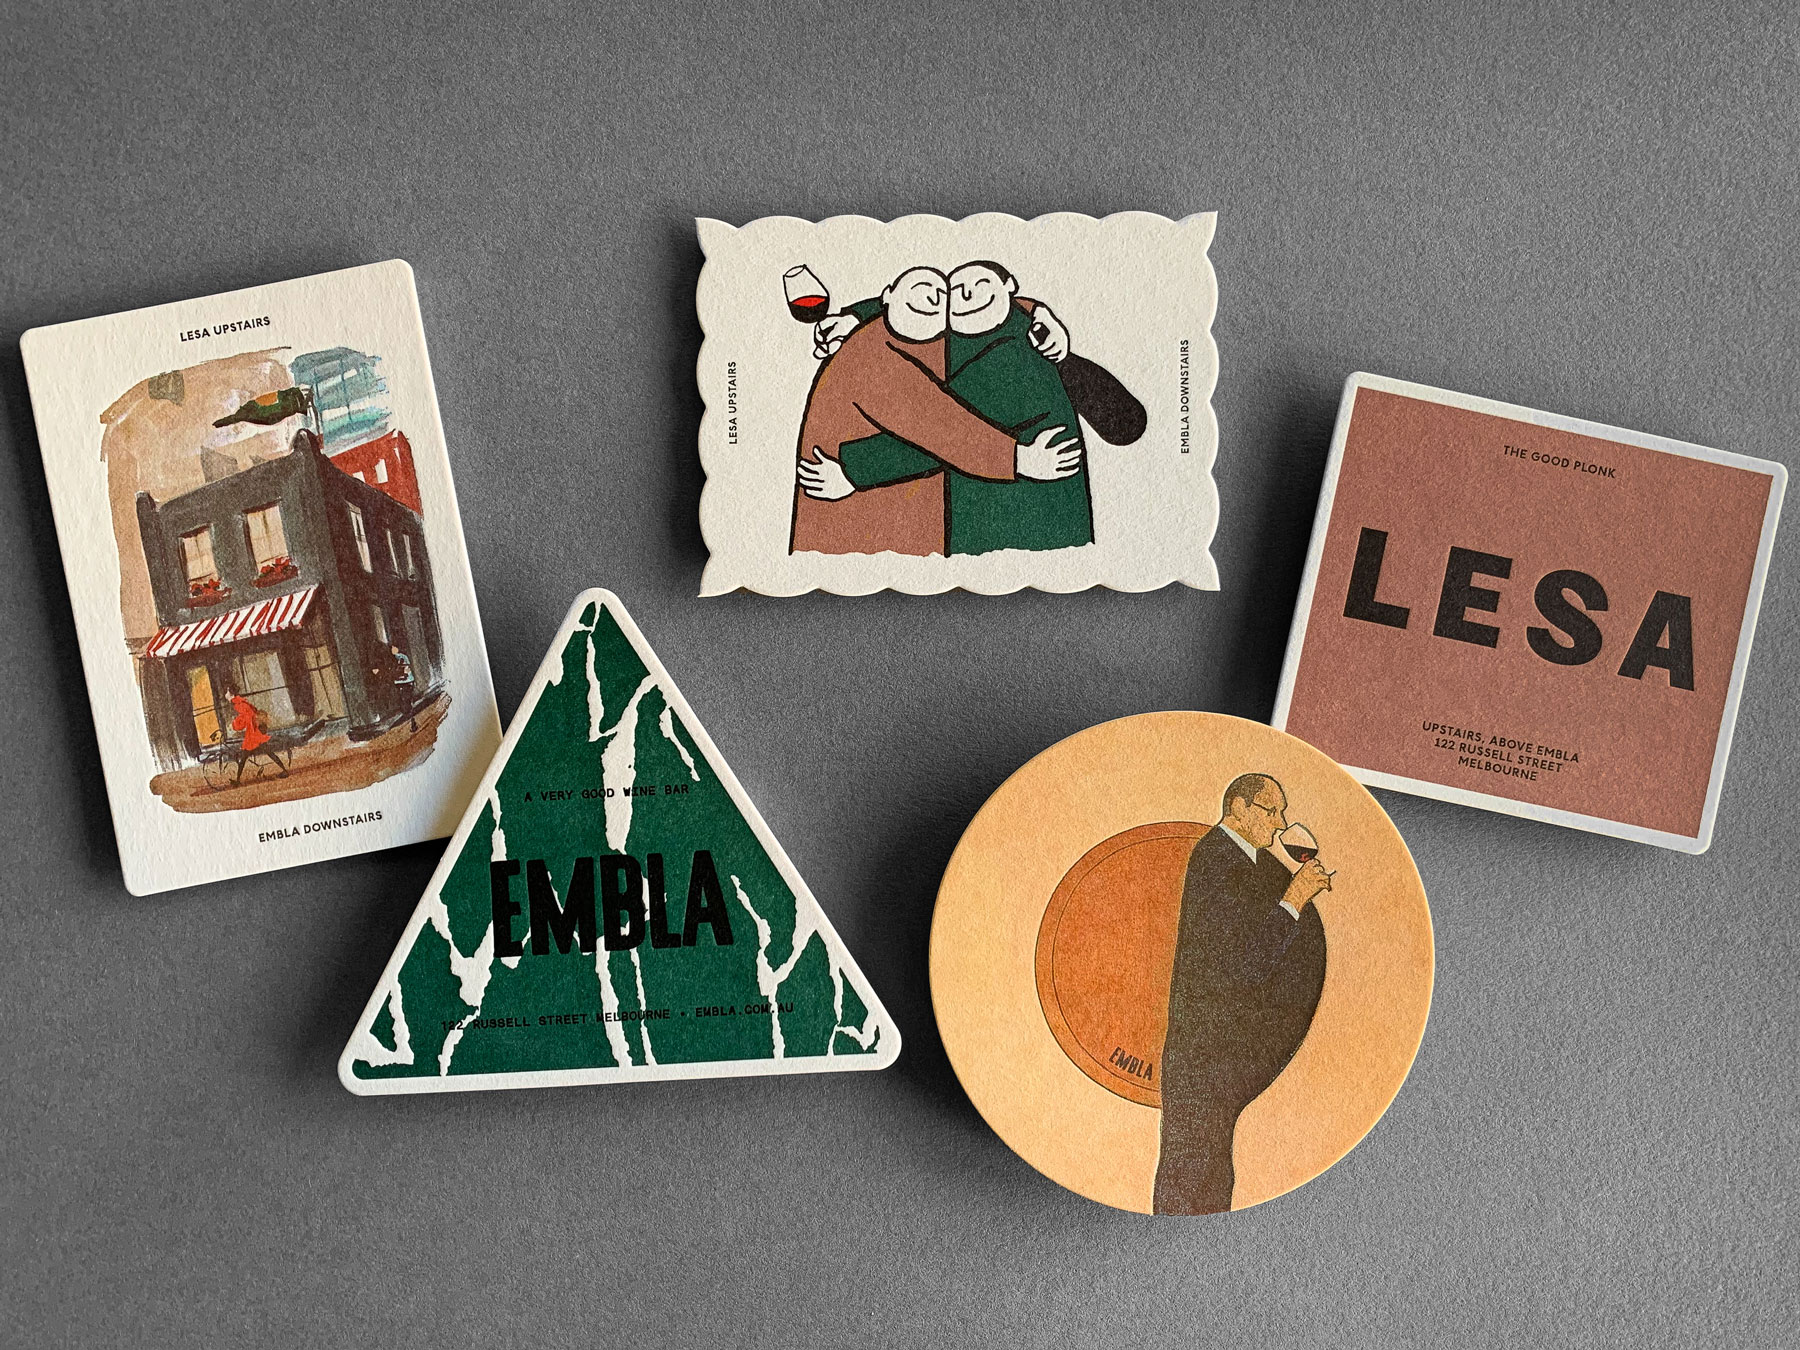 Letterpress coasters for Embla Lesa and A Friend of Mine on Beer Matt Board 390gsm